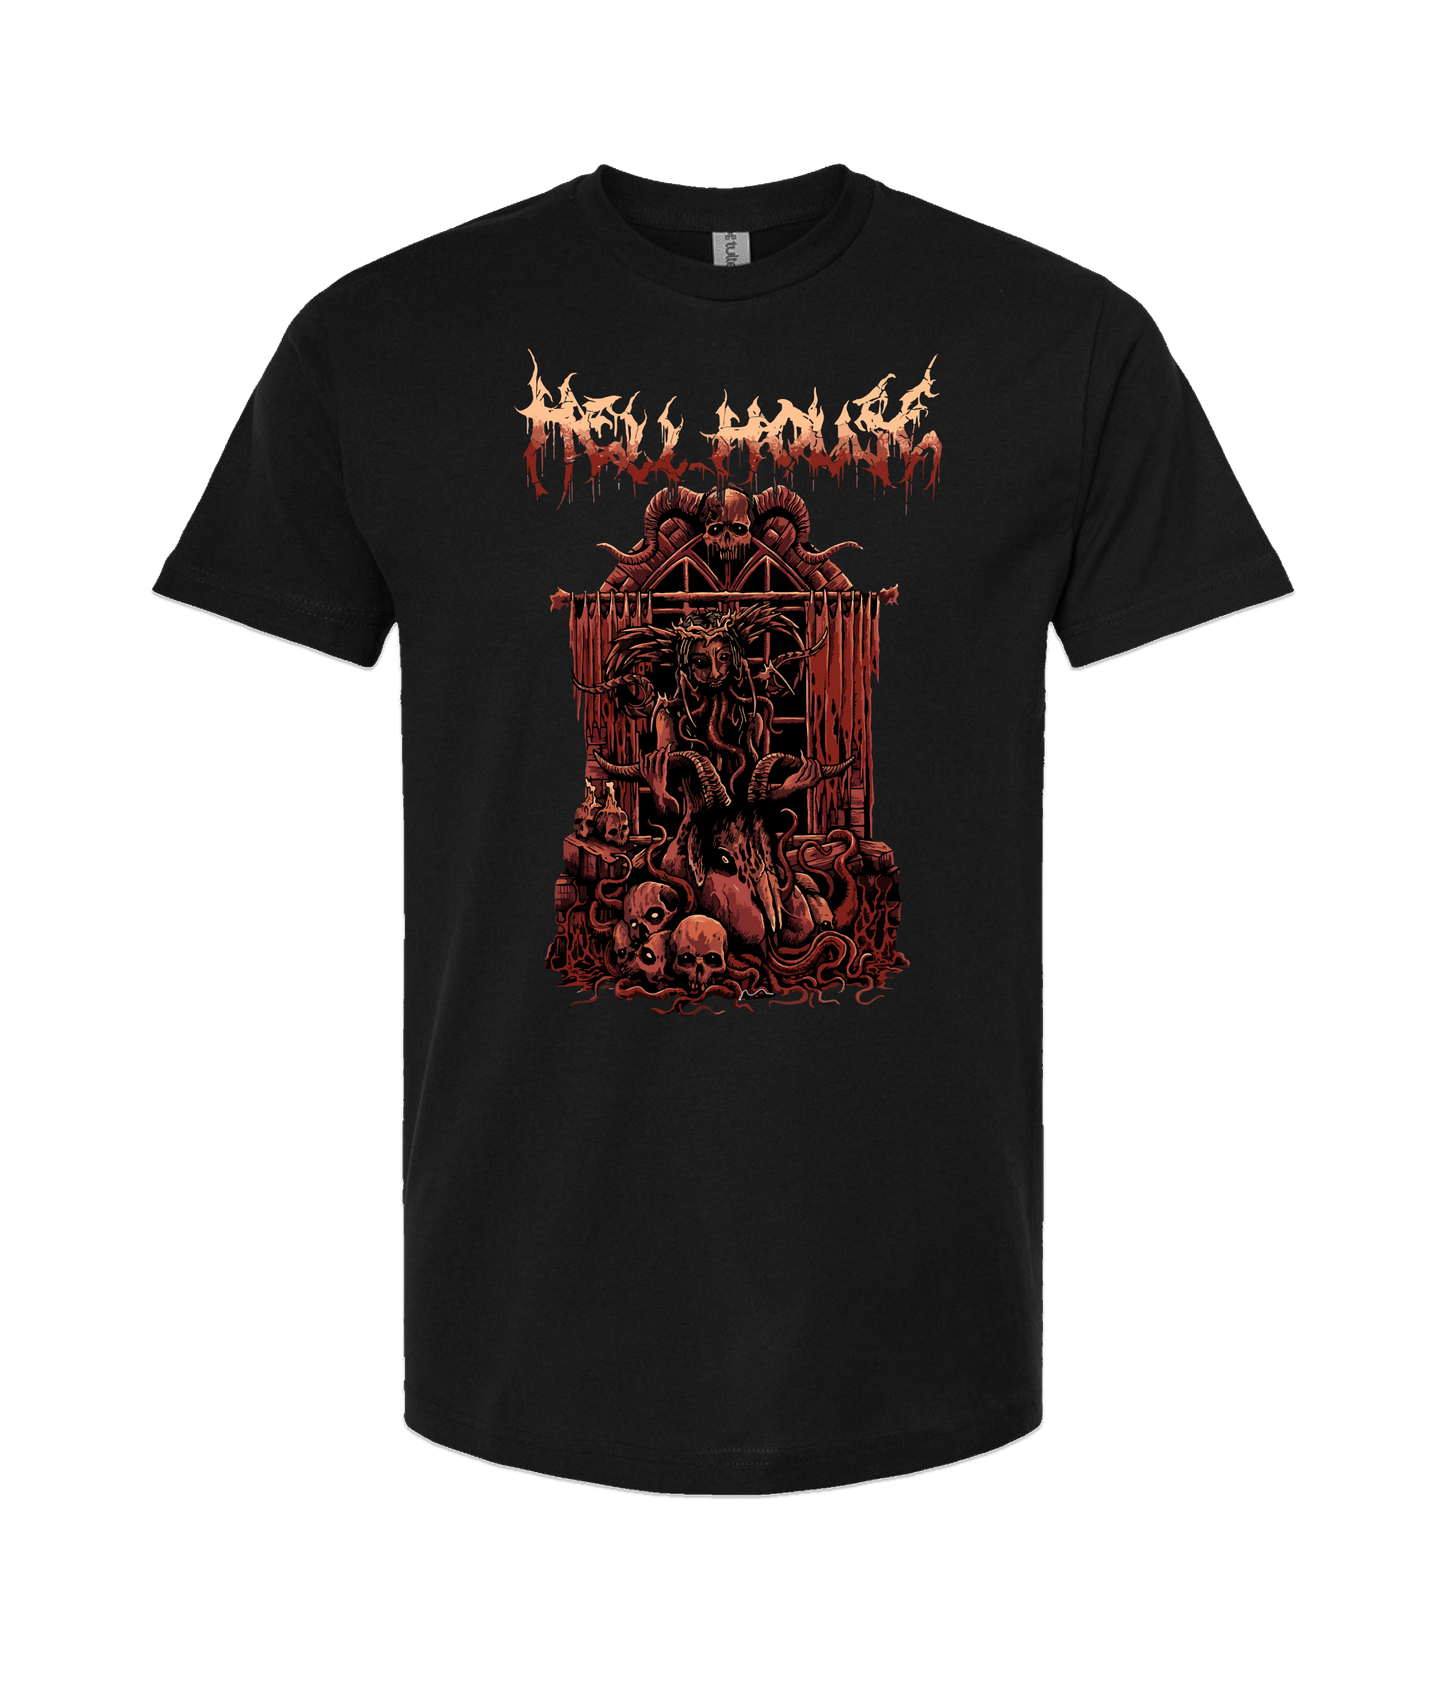 Hellhouse crypt - GIRLGOAT - Black T-Shirt